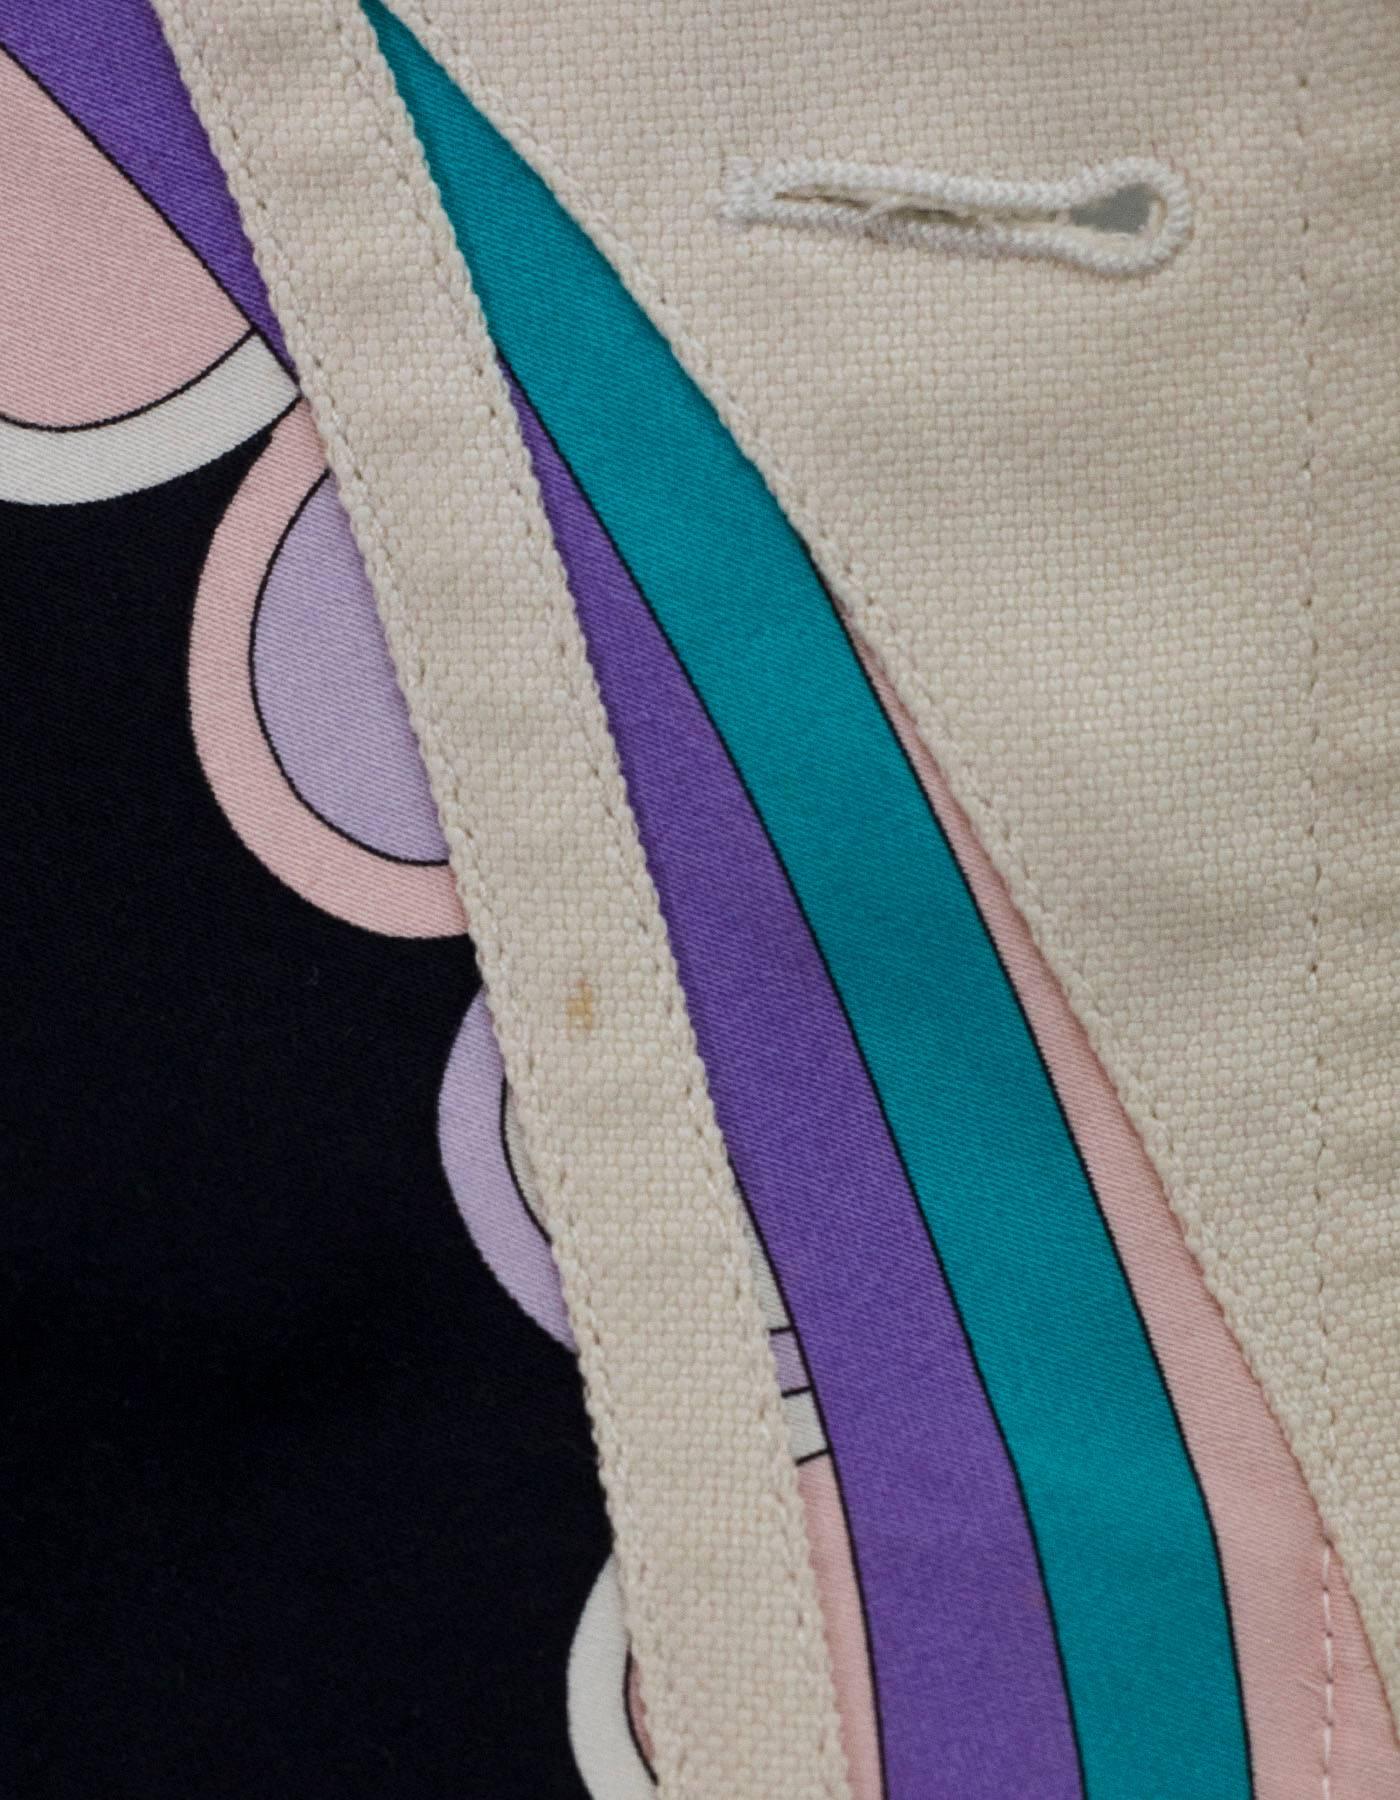 Emilio Pucci Beige & Multi-Colored Printed Jacket sz US4 2